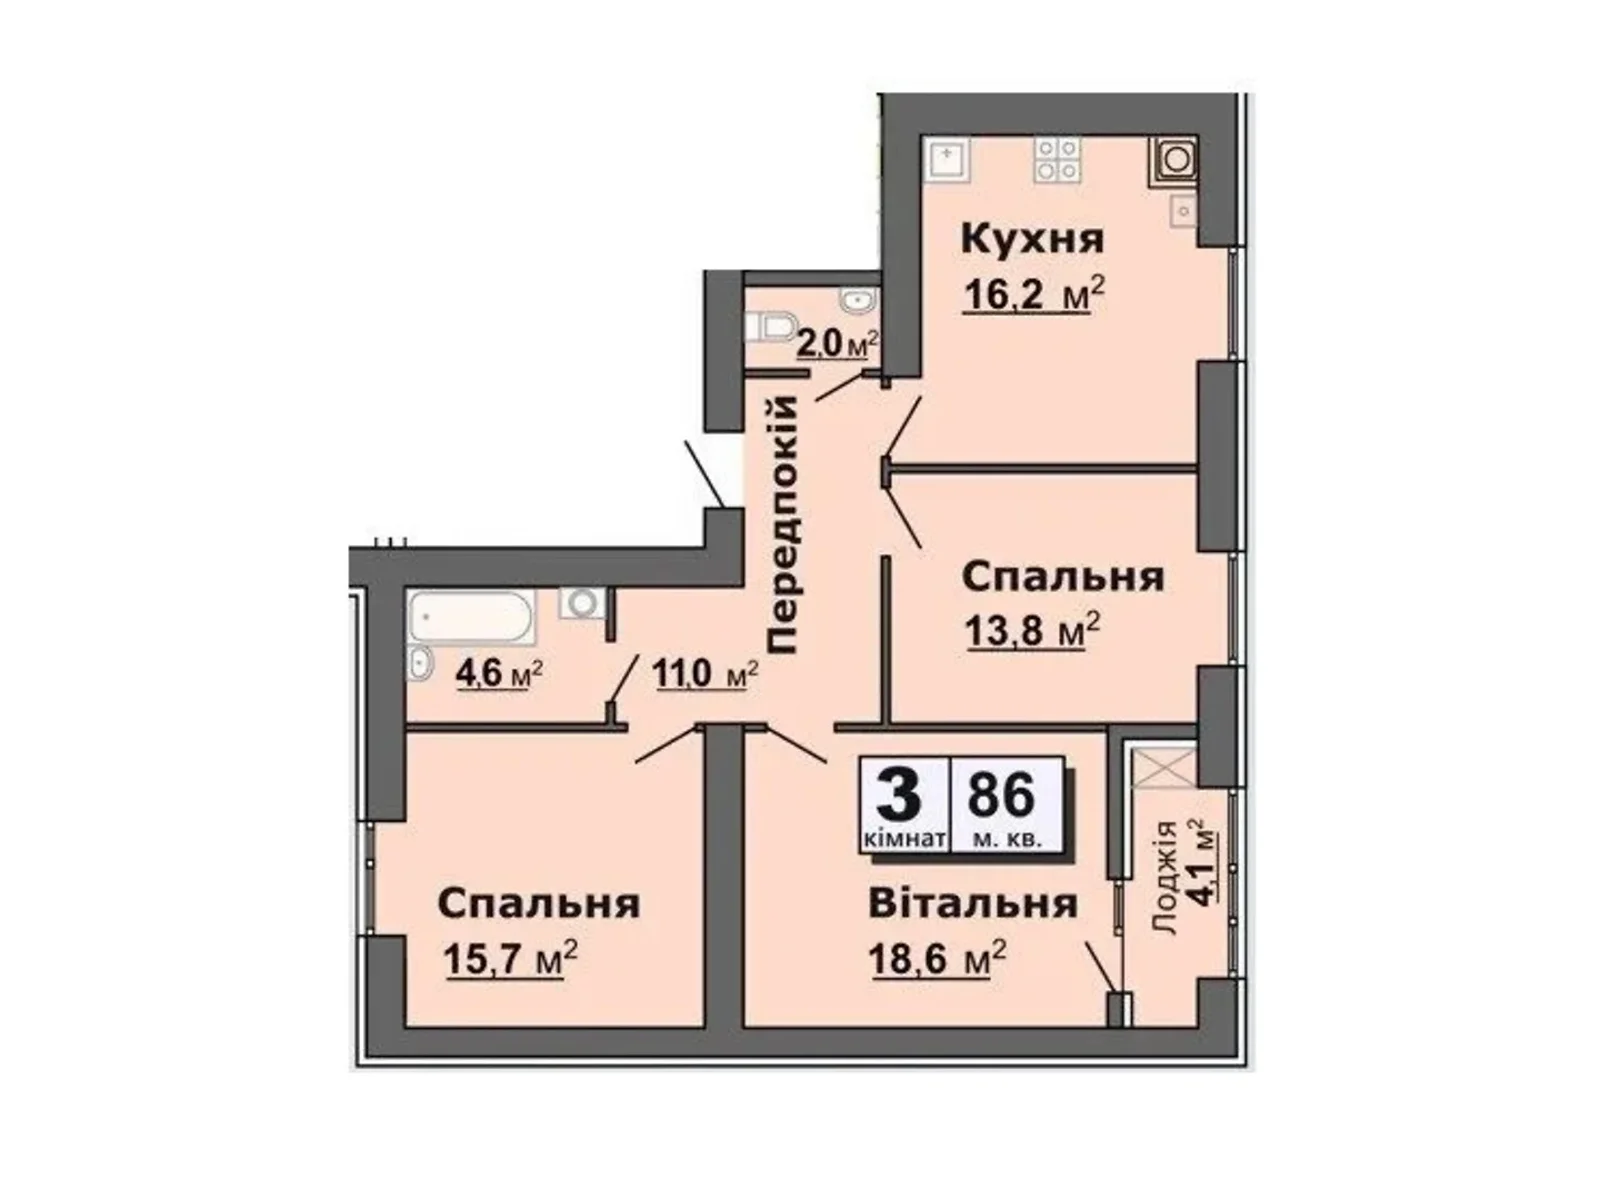 3-кімнатна квартира 86 кв. м у Луцьку, цена: 73375 $